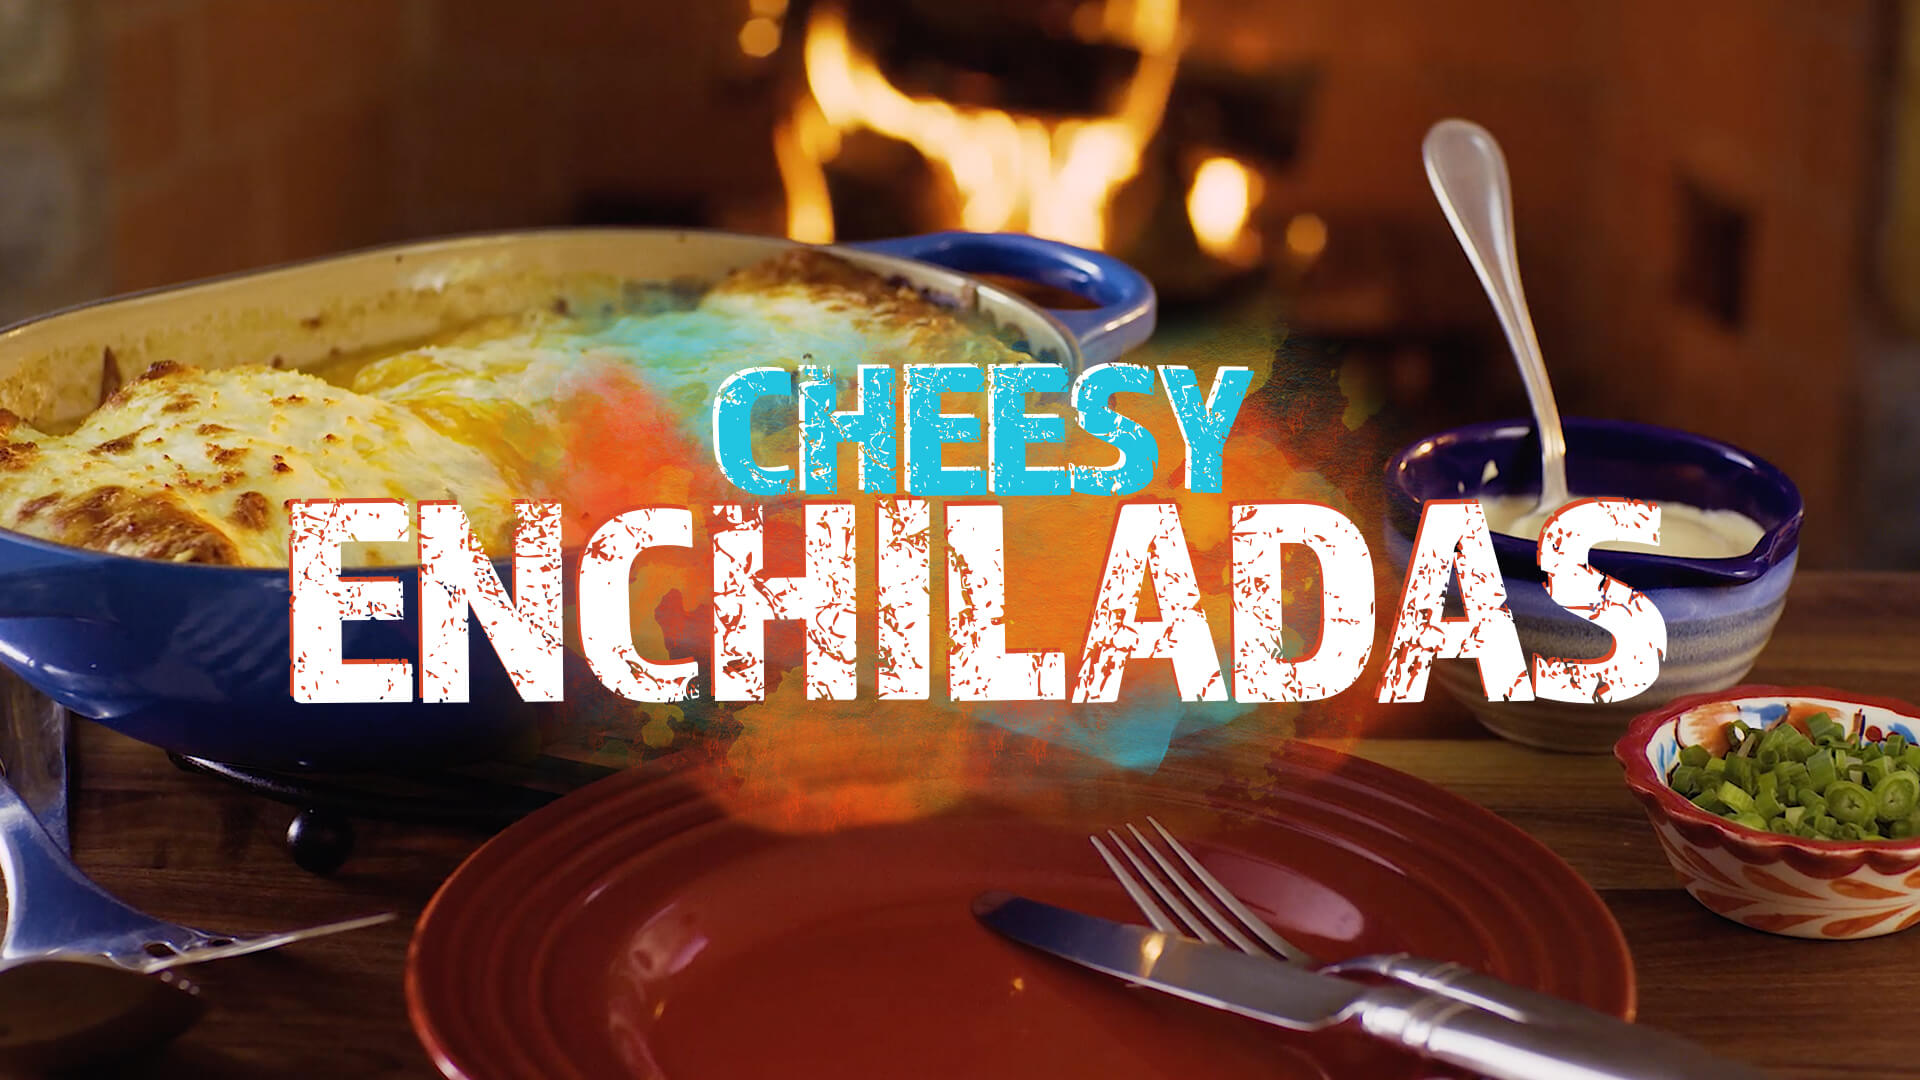 Cheesy enchiladas